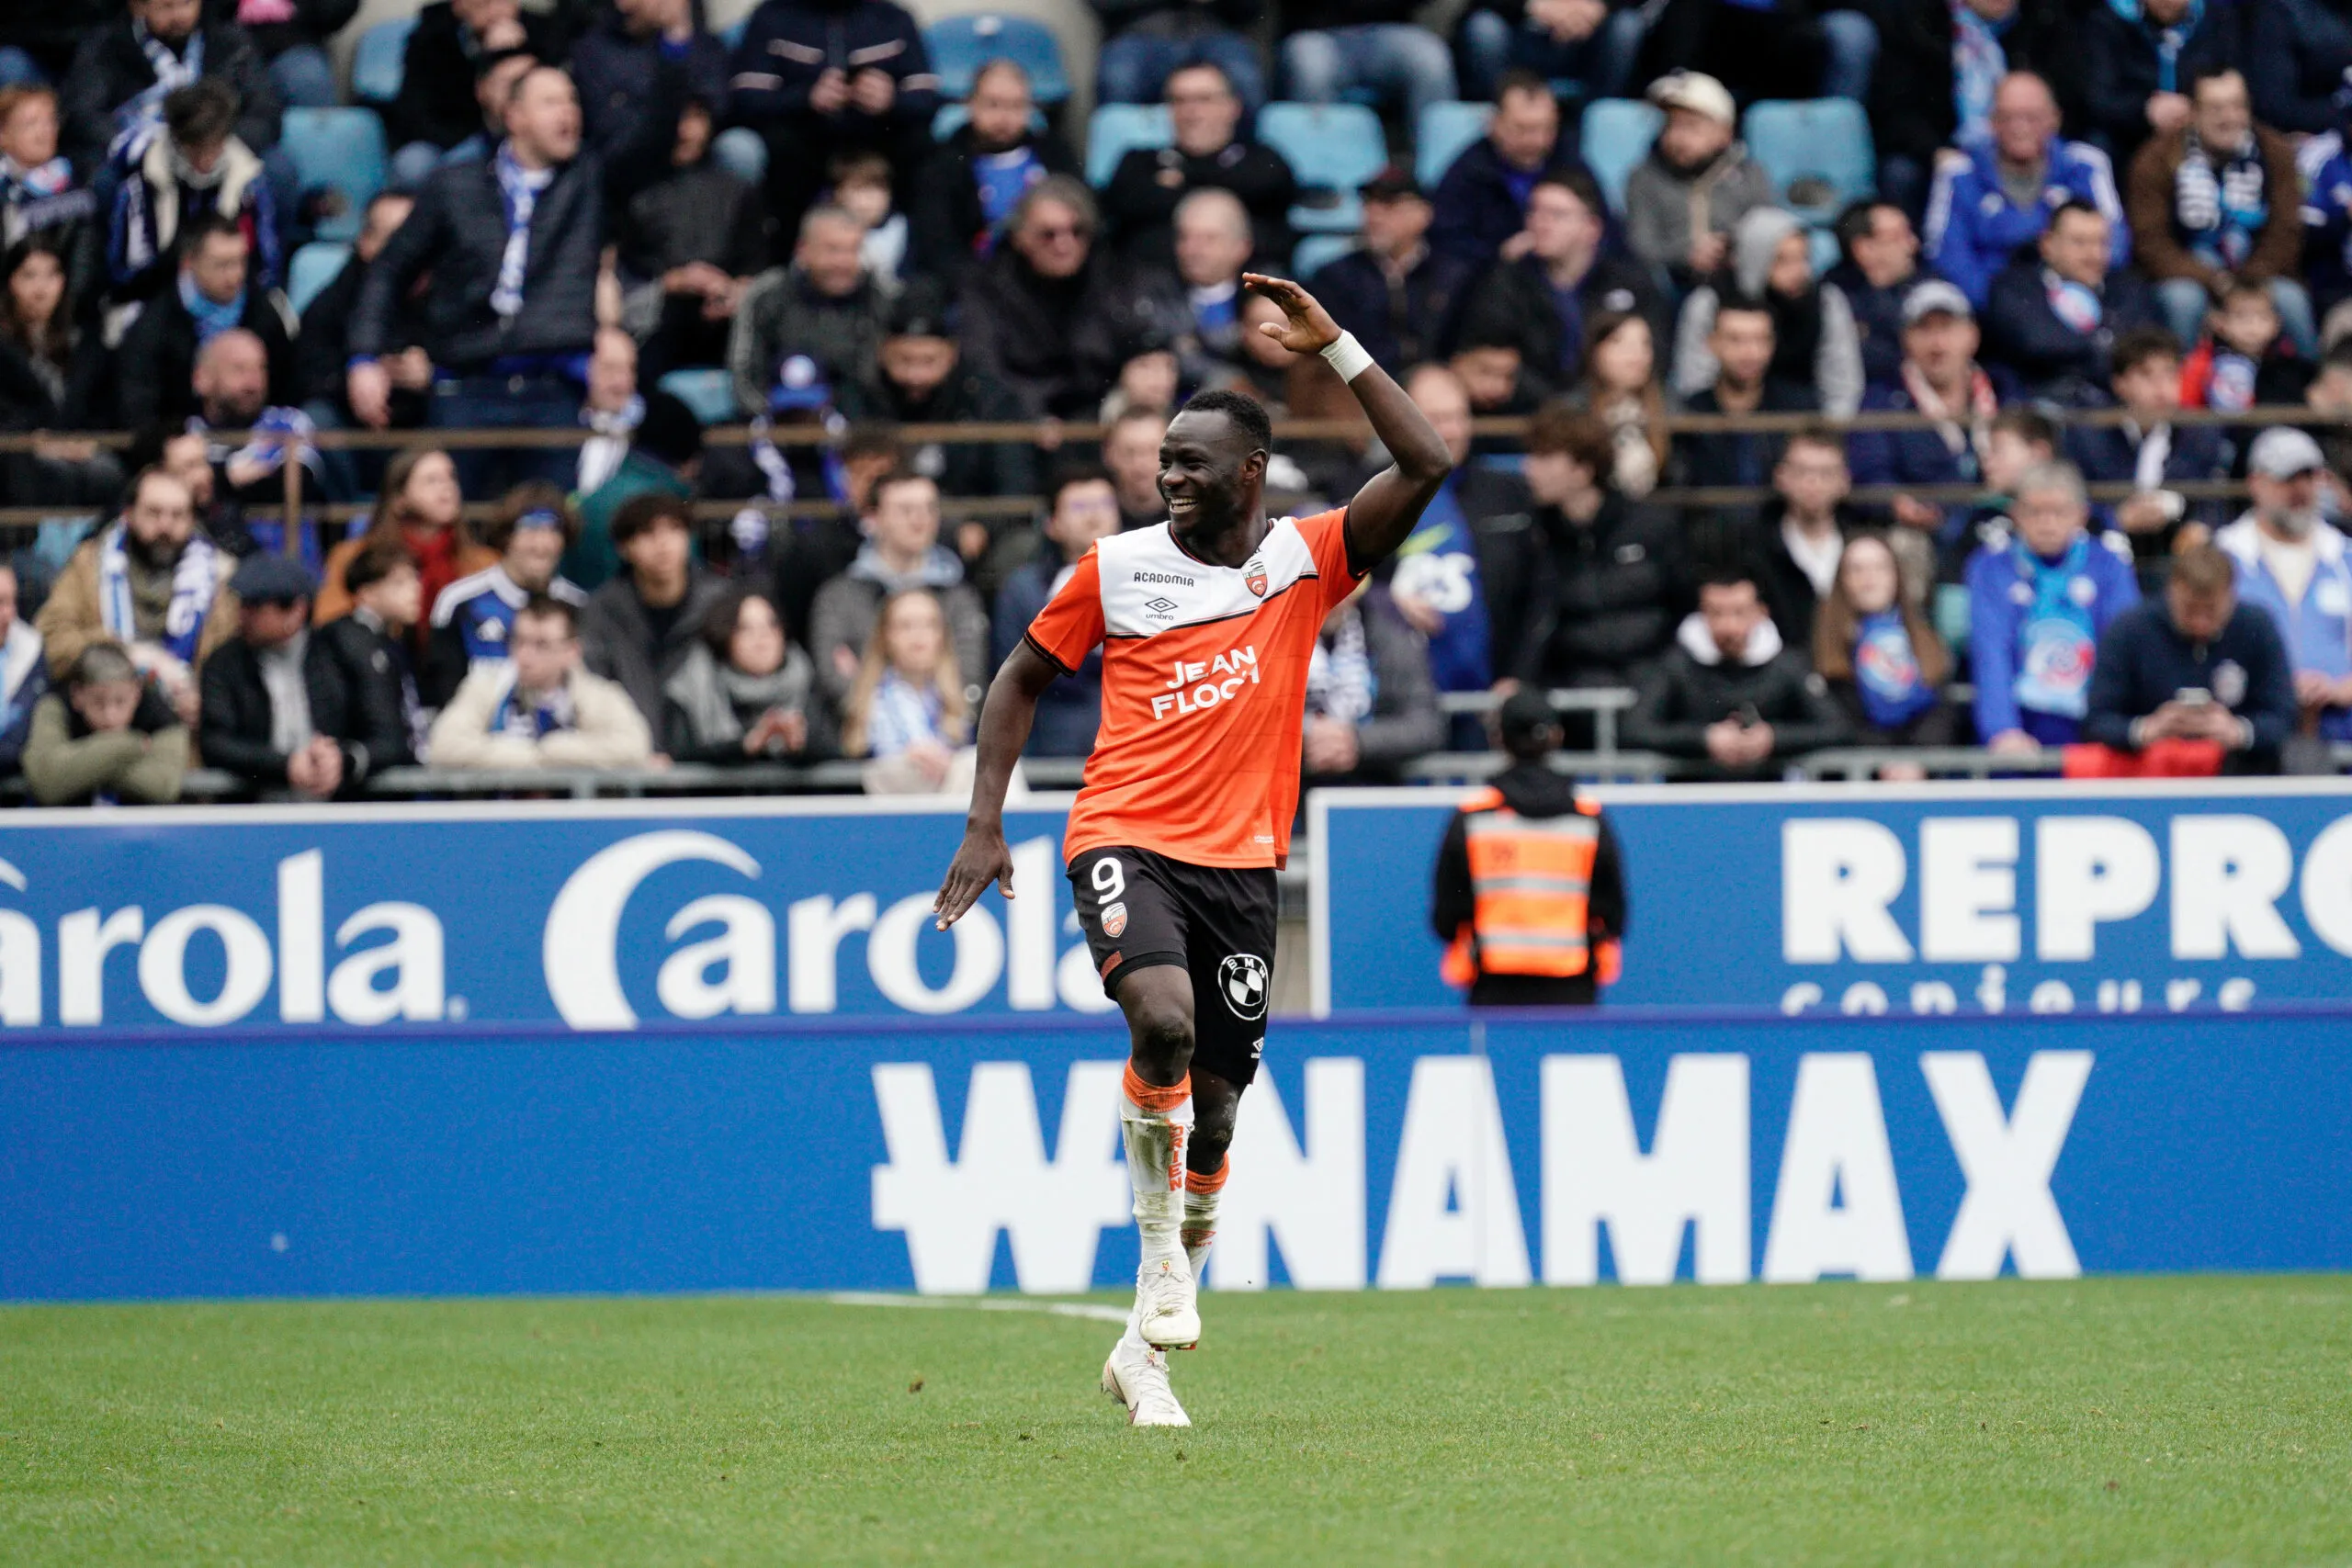 Mohamed Bamba double buteur face à Strasbourg.